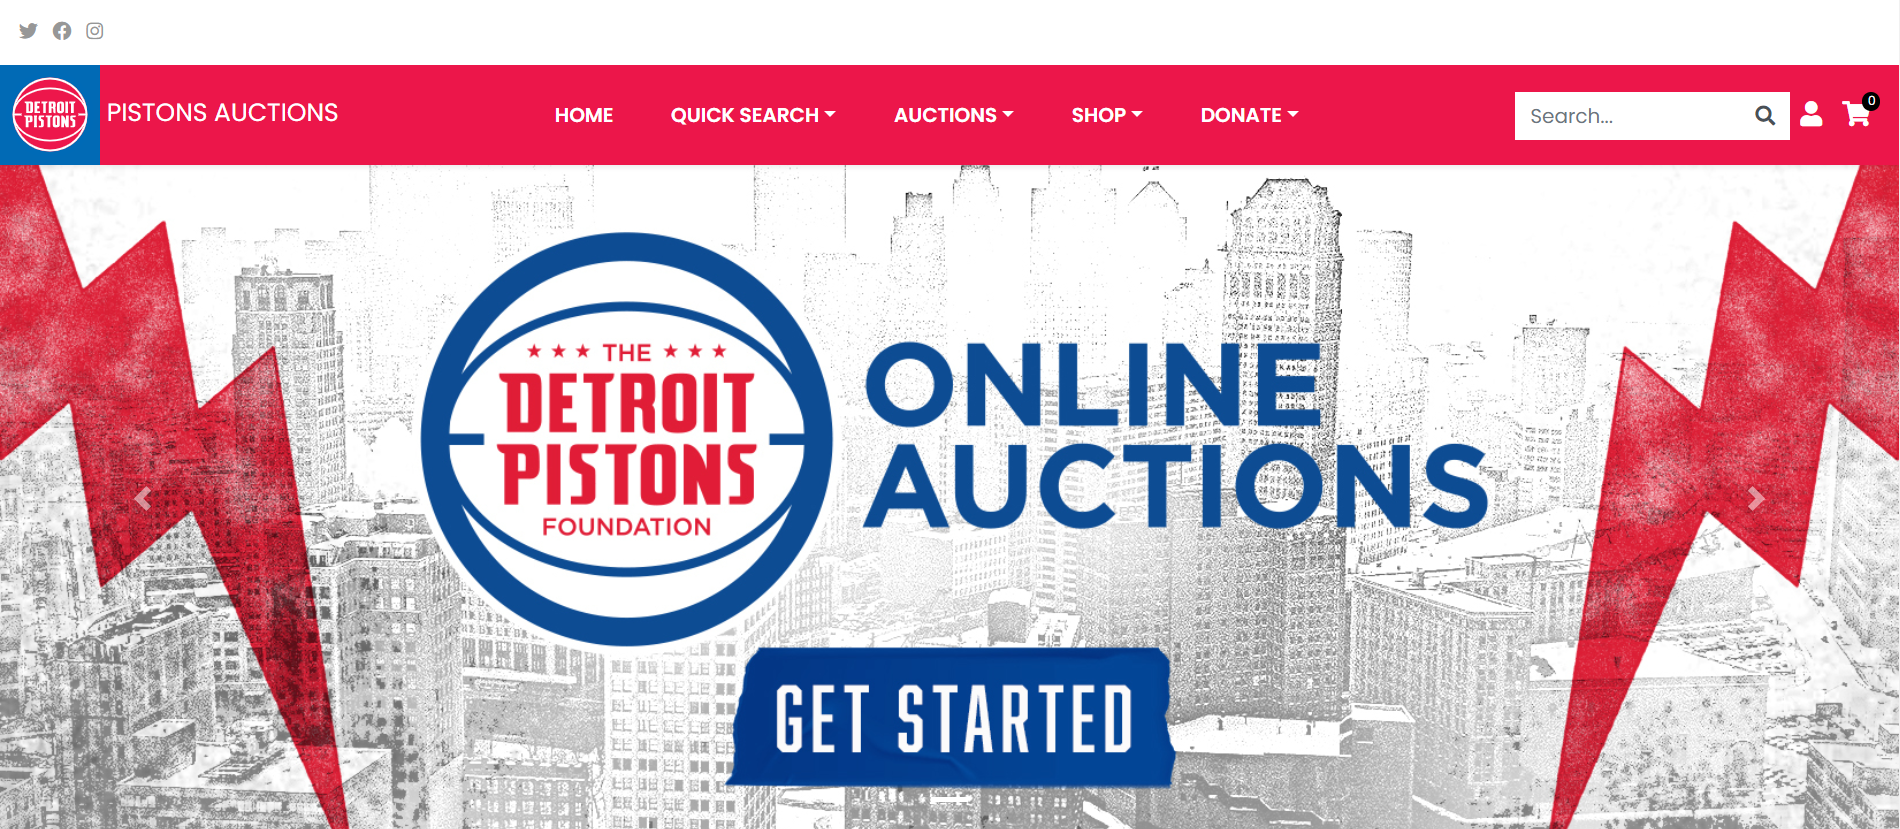 Pistons Auction Marketplace